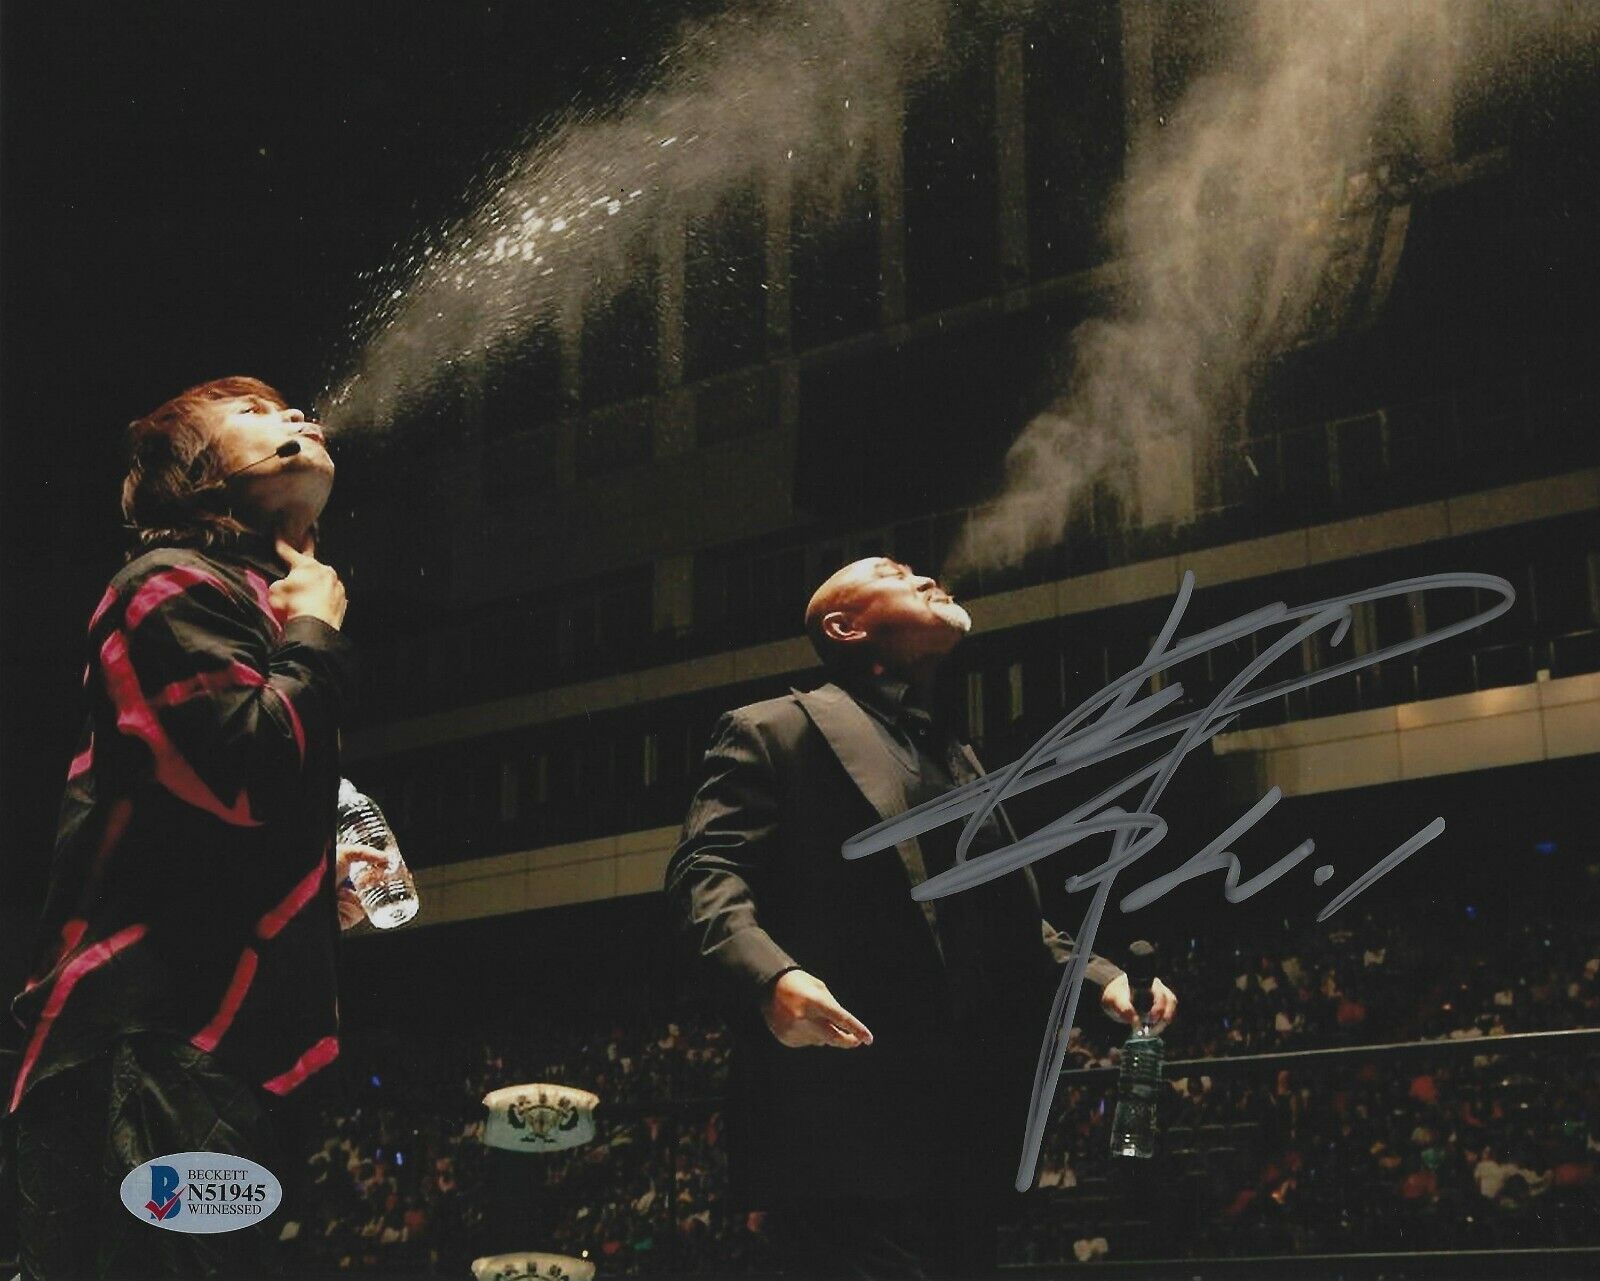 Keiji Mutoh Signed 8x10 Photo Poster painting BAS COA WCW New Japan Pro Wrestling Great Muta 945